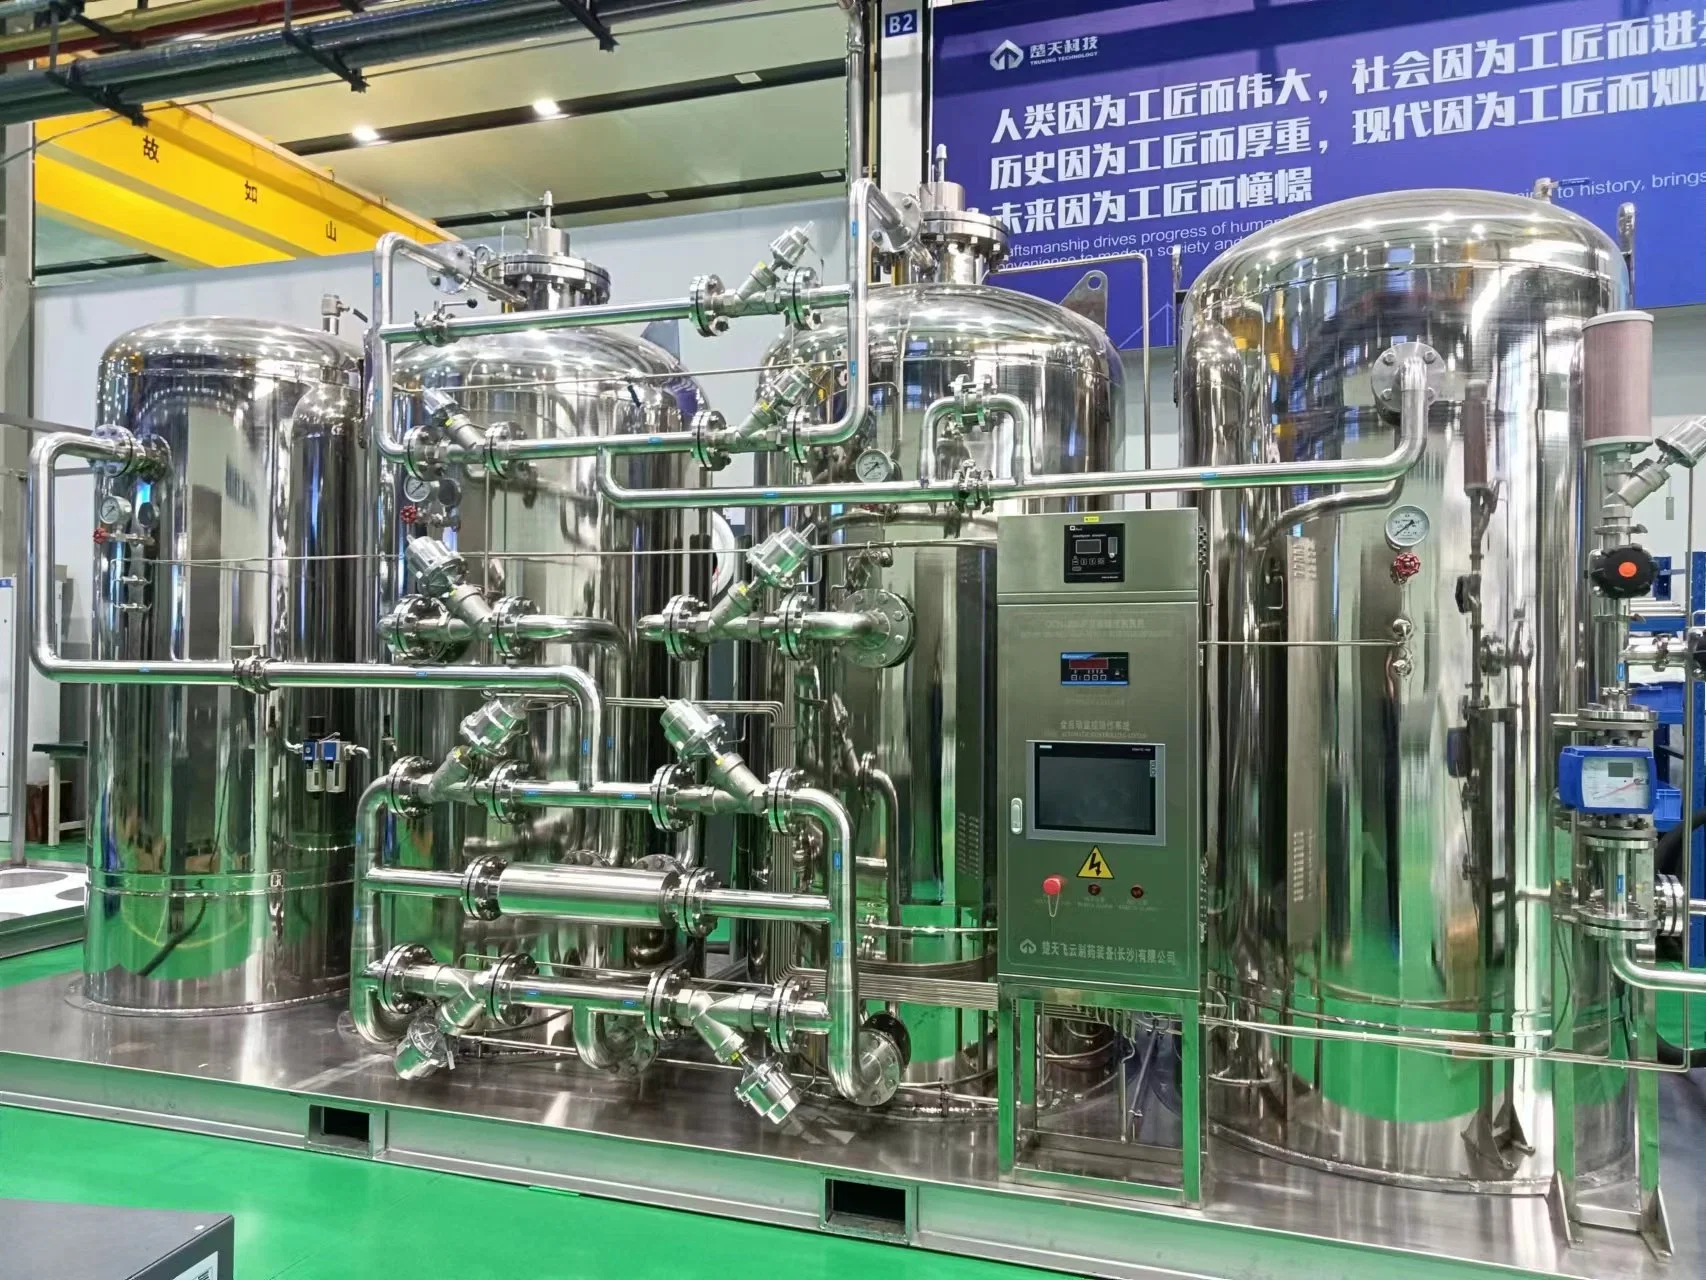 Psa (Pressure Swing Adsorption) Industrial Nitrogen Generator